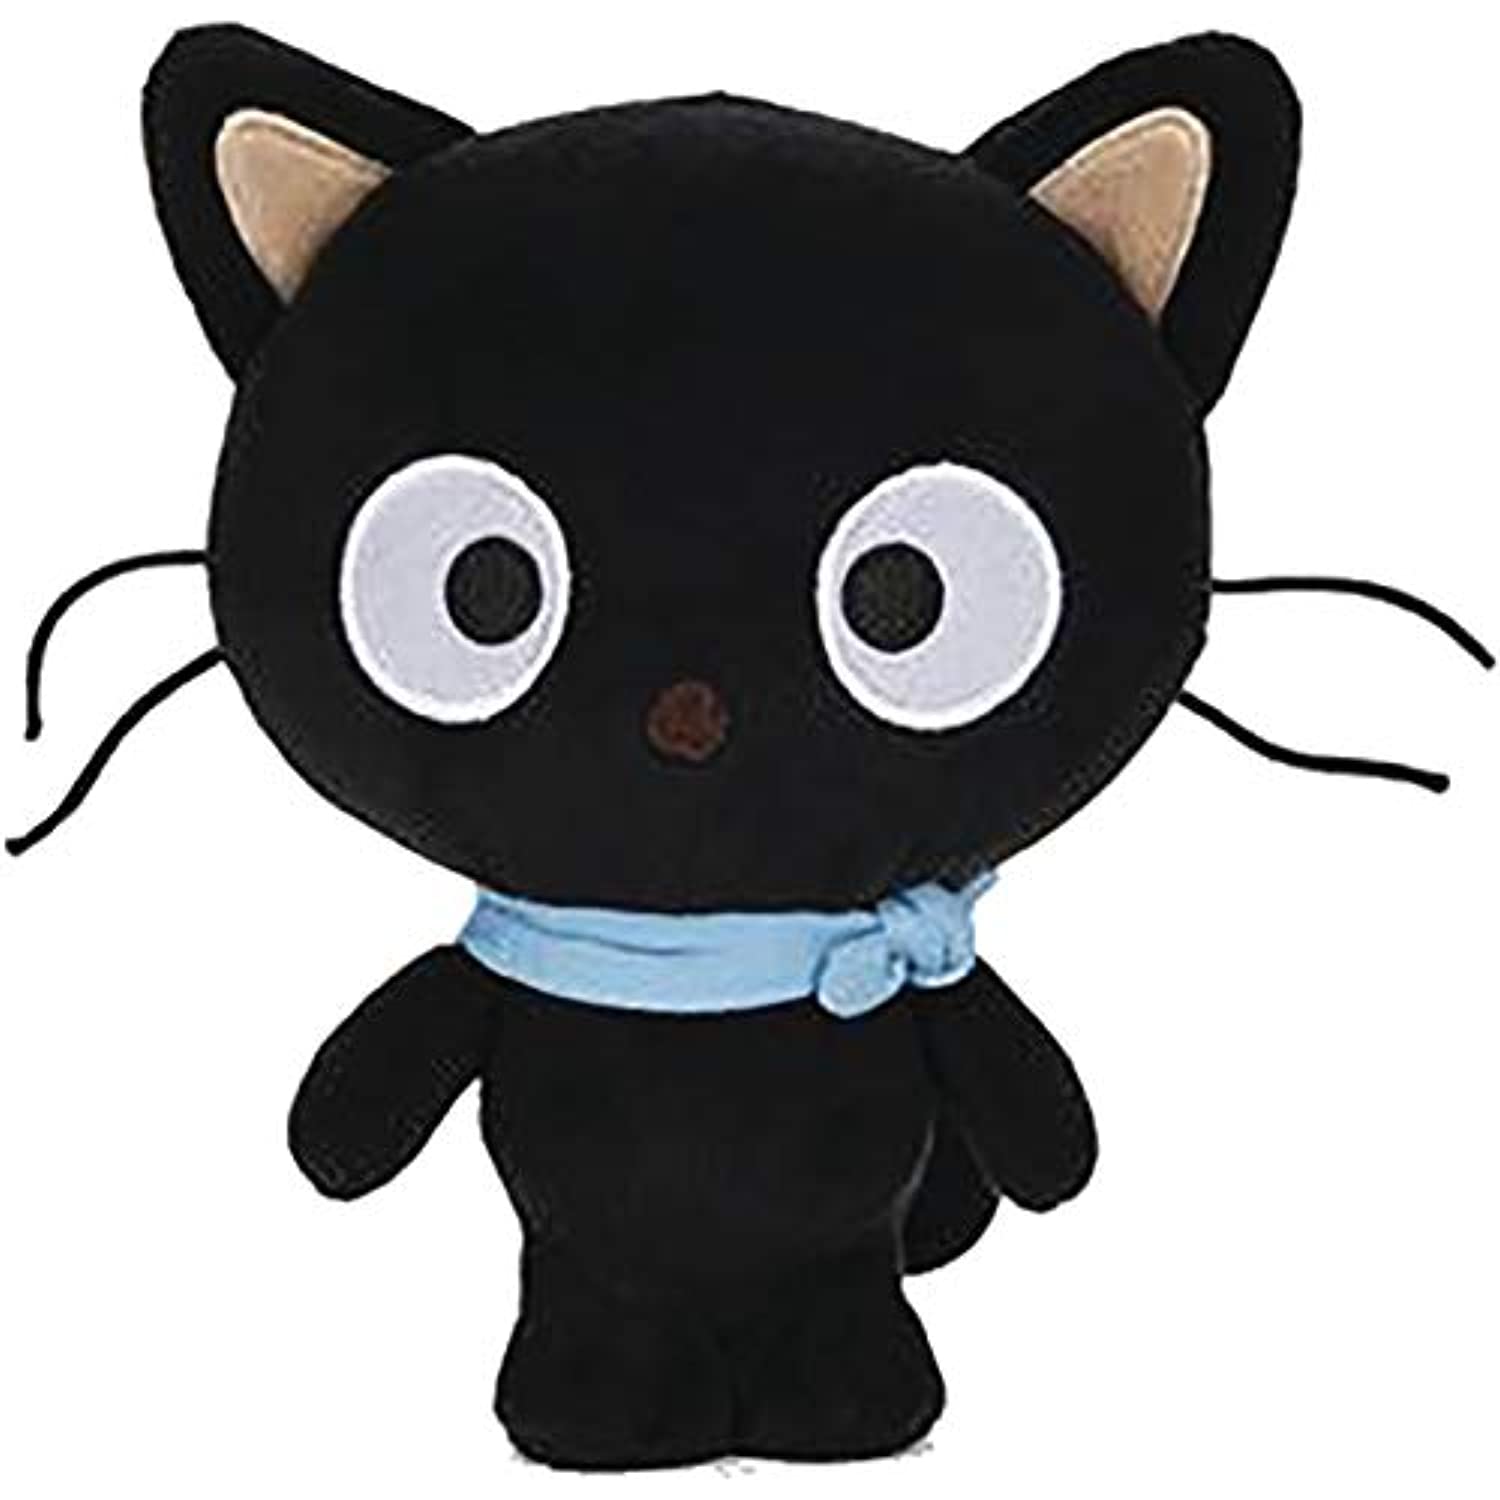 GUND Sanrio Hello Kitty Chococat Plush Stuffed Animal, 6"